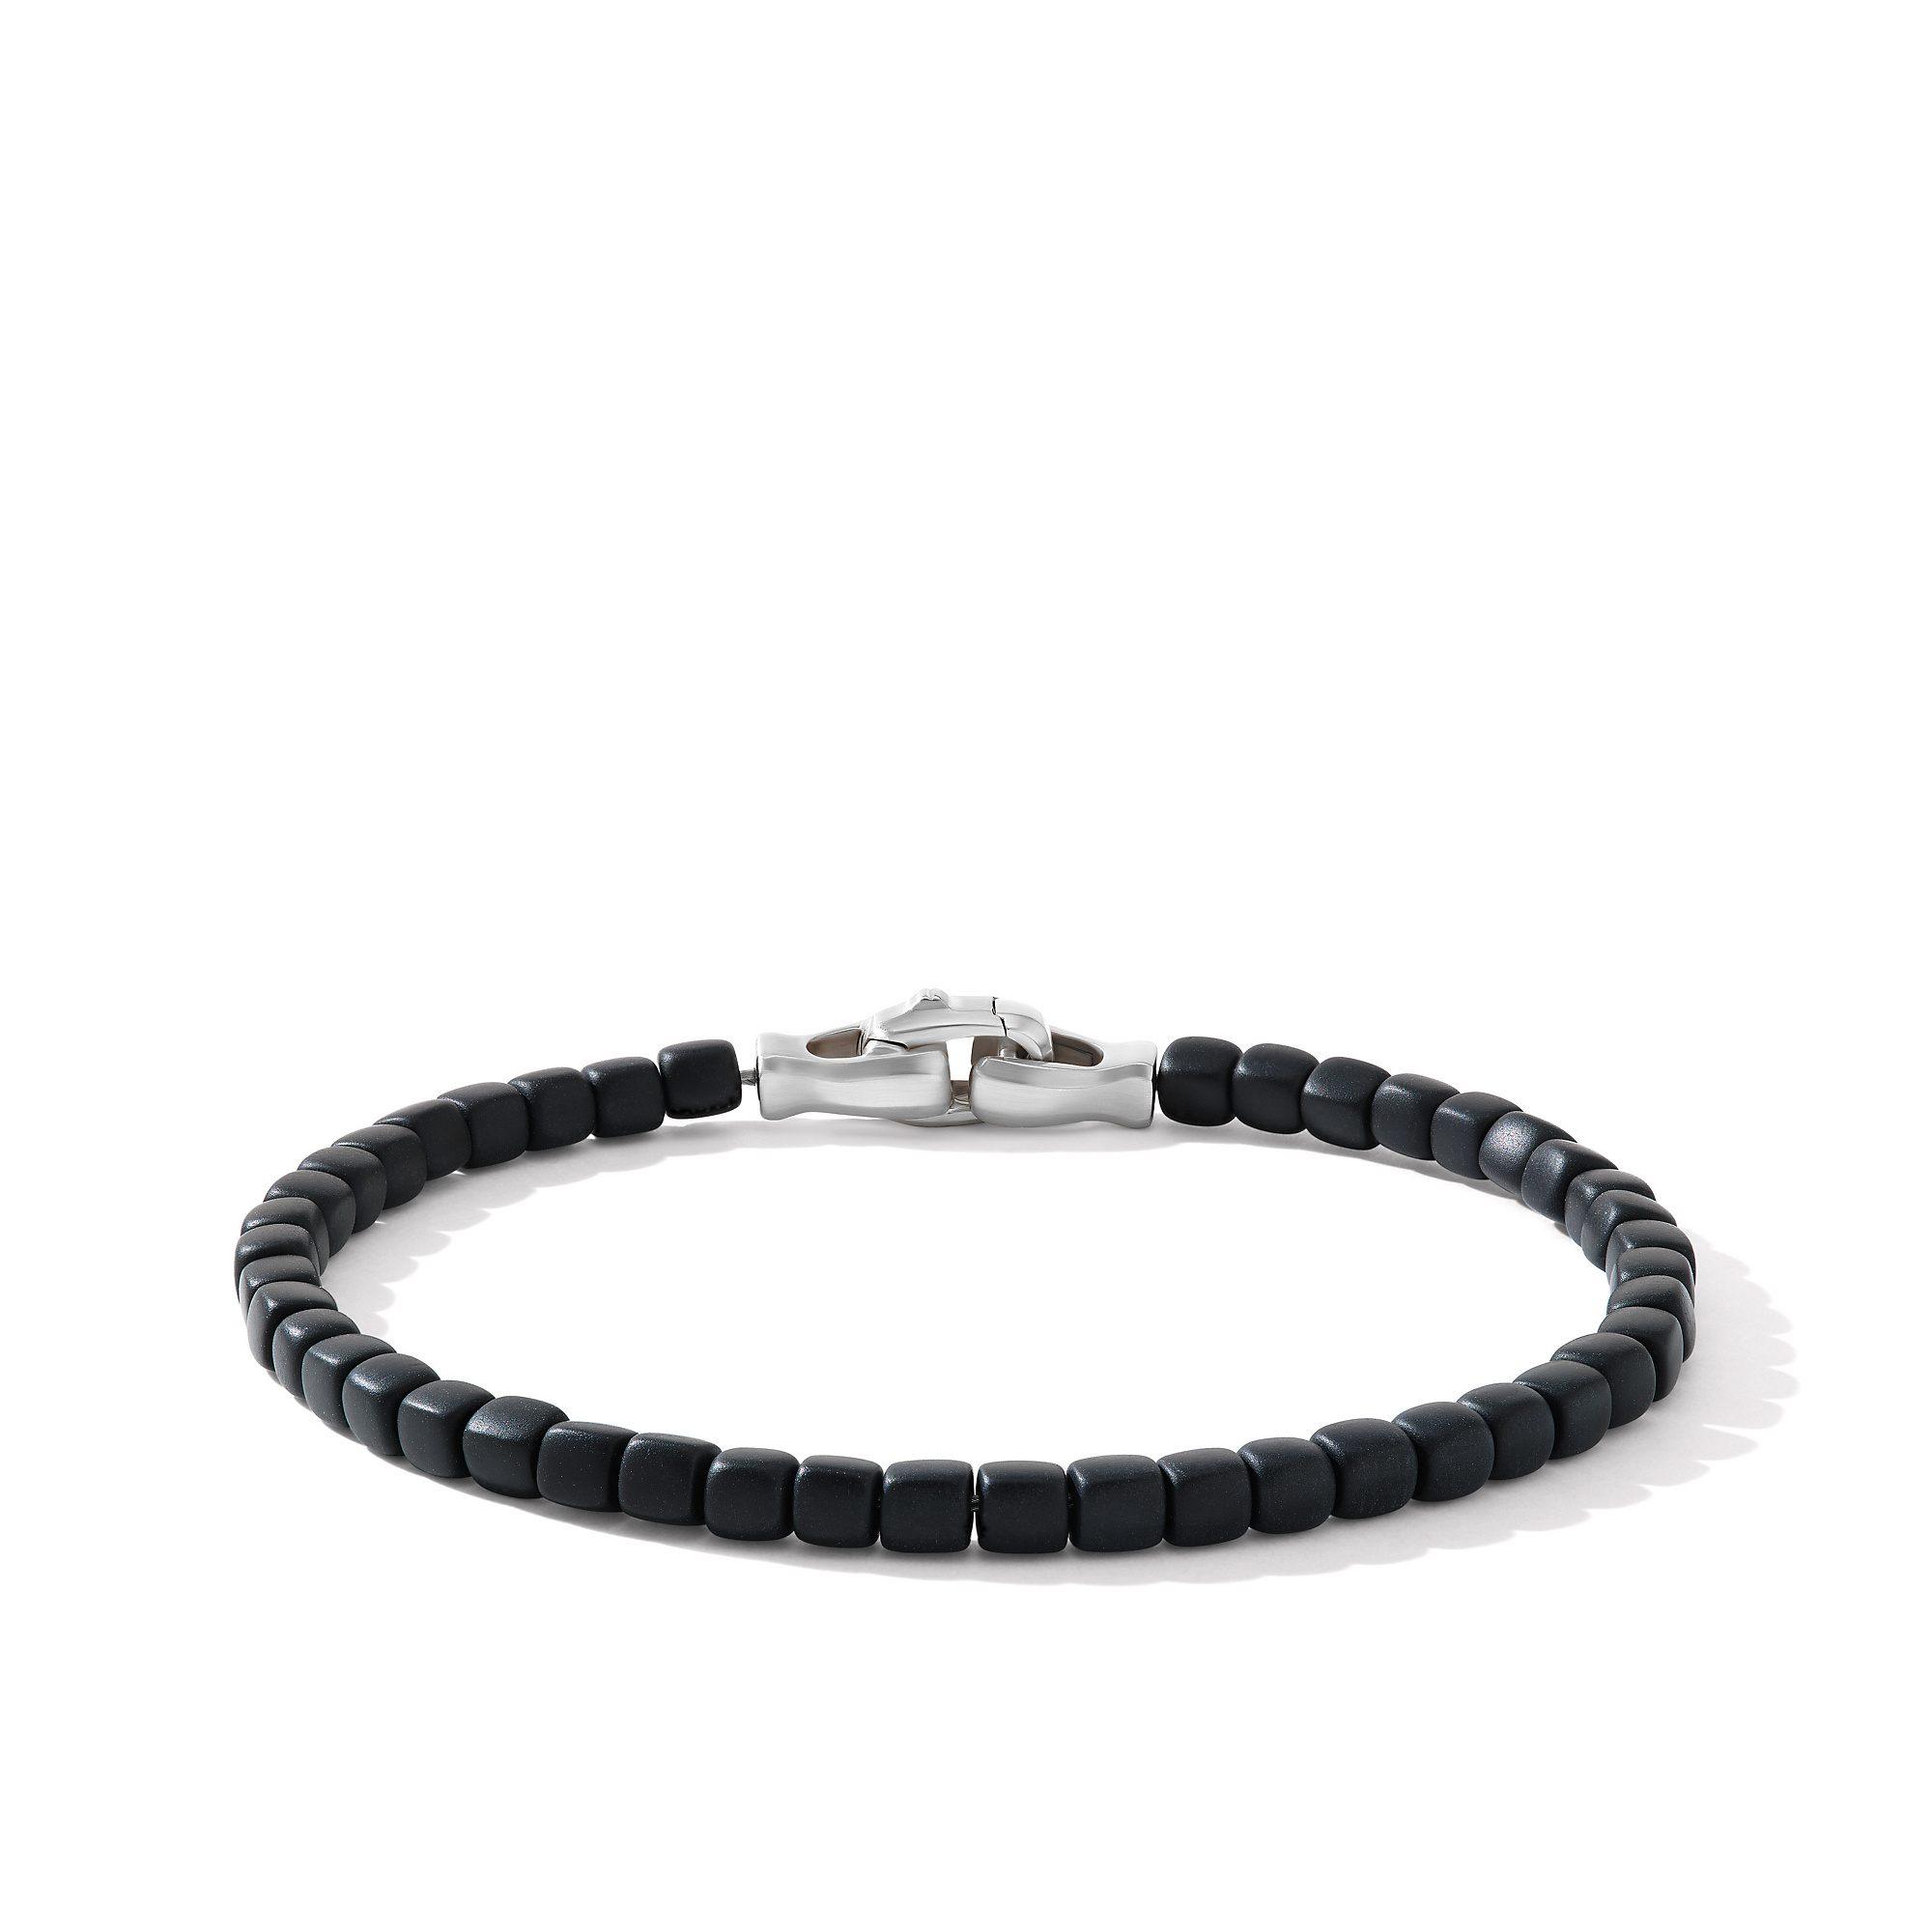 David Yurman Spiritual Beads Cushion Bracelet with Black Onyx | Front View